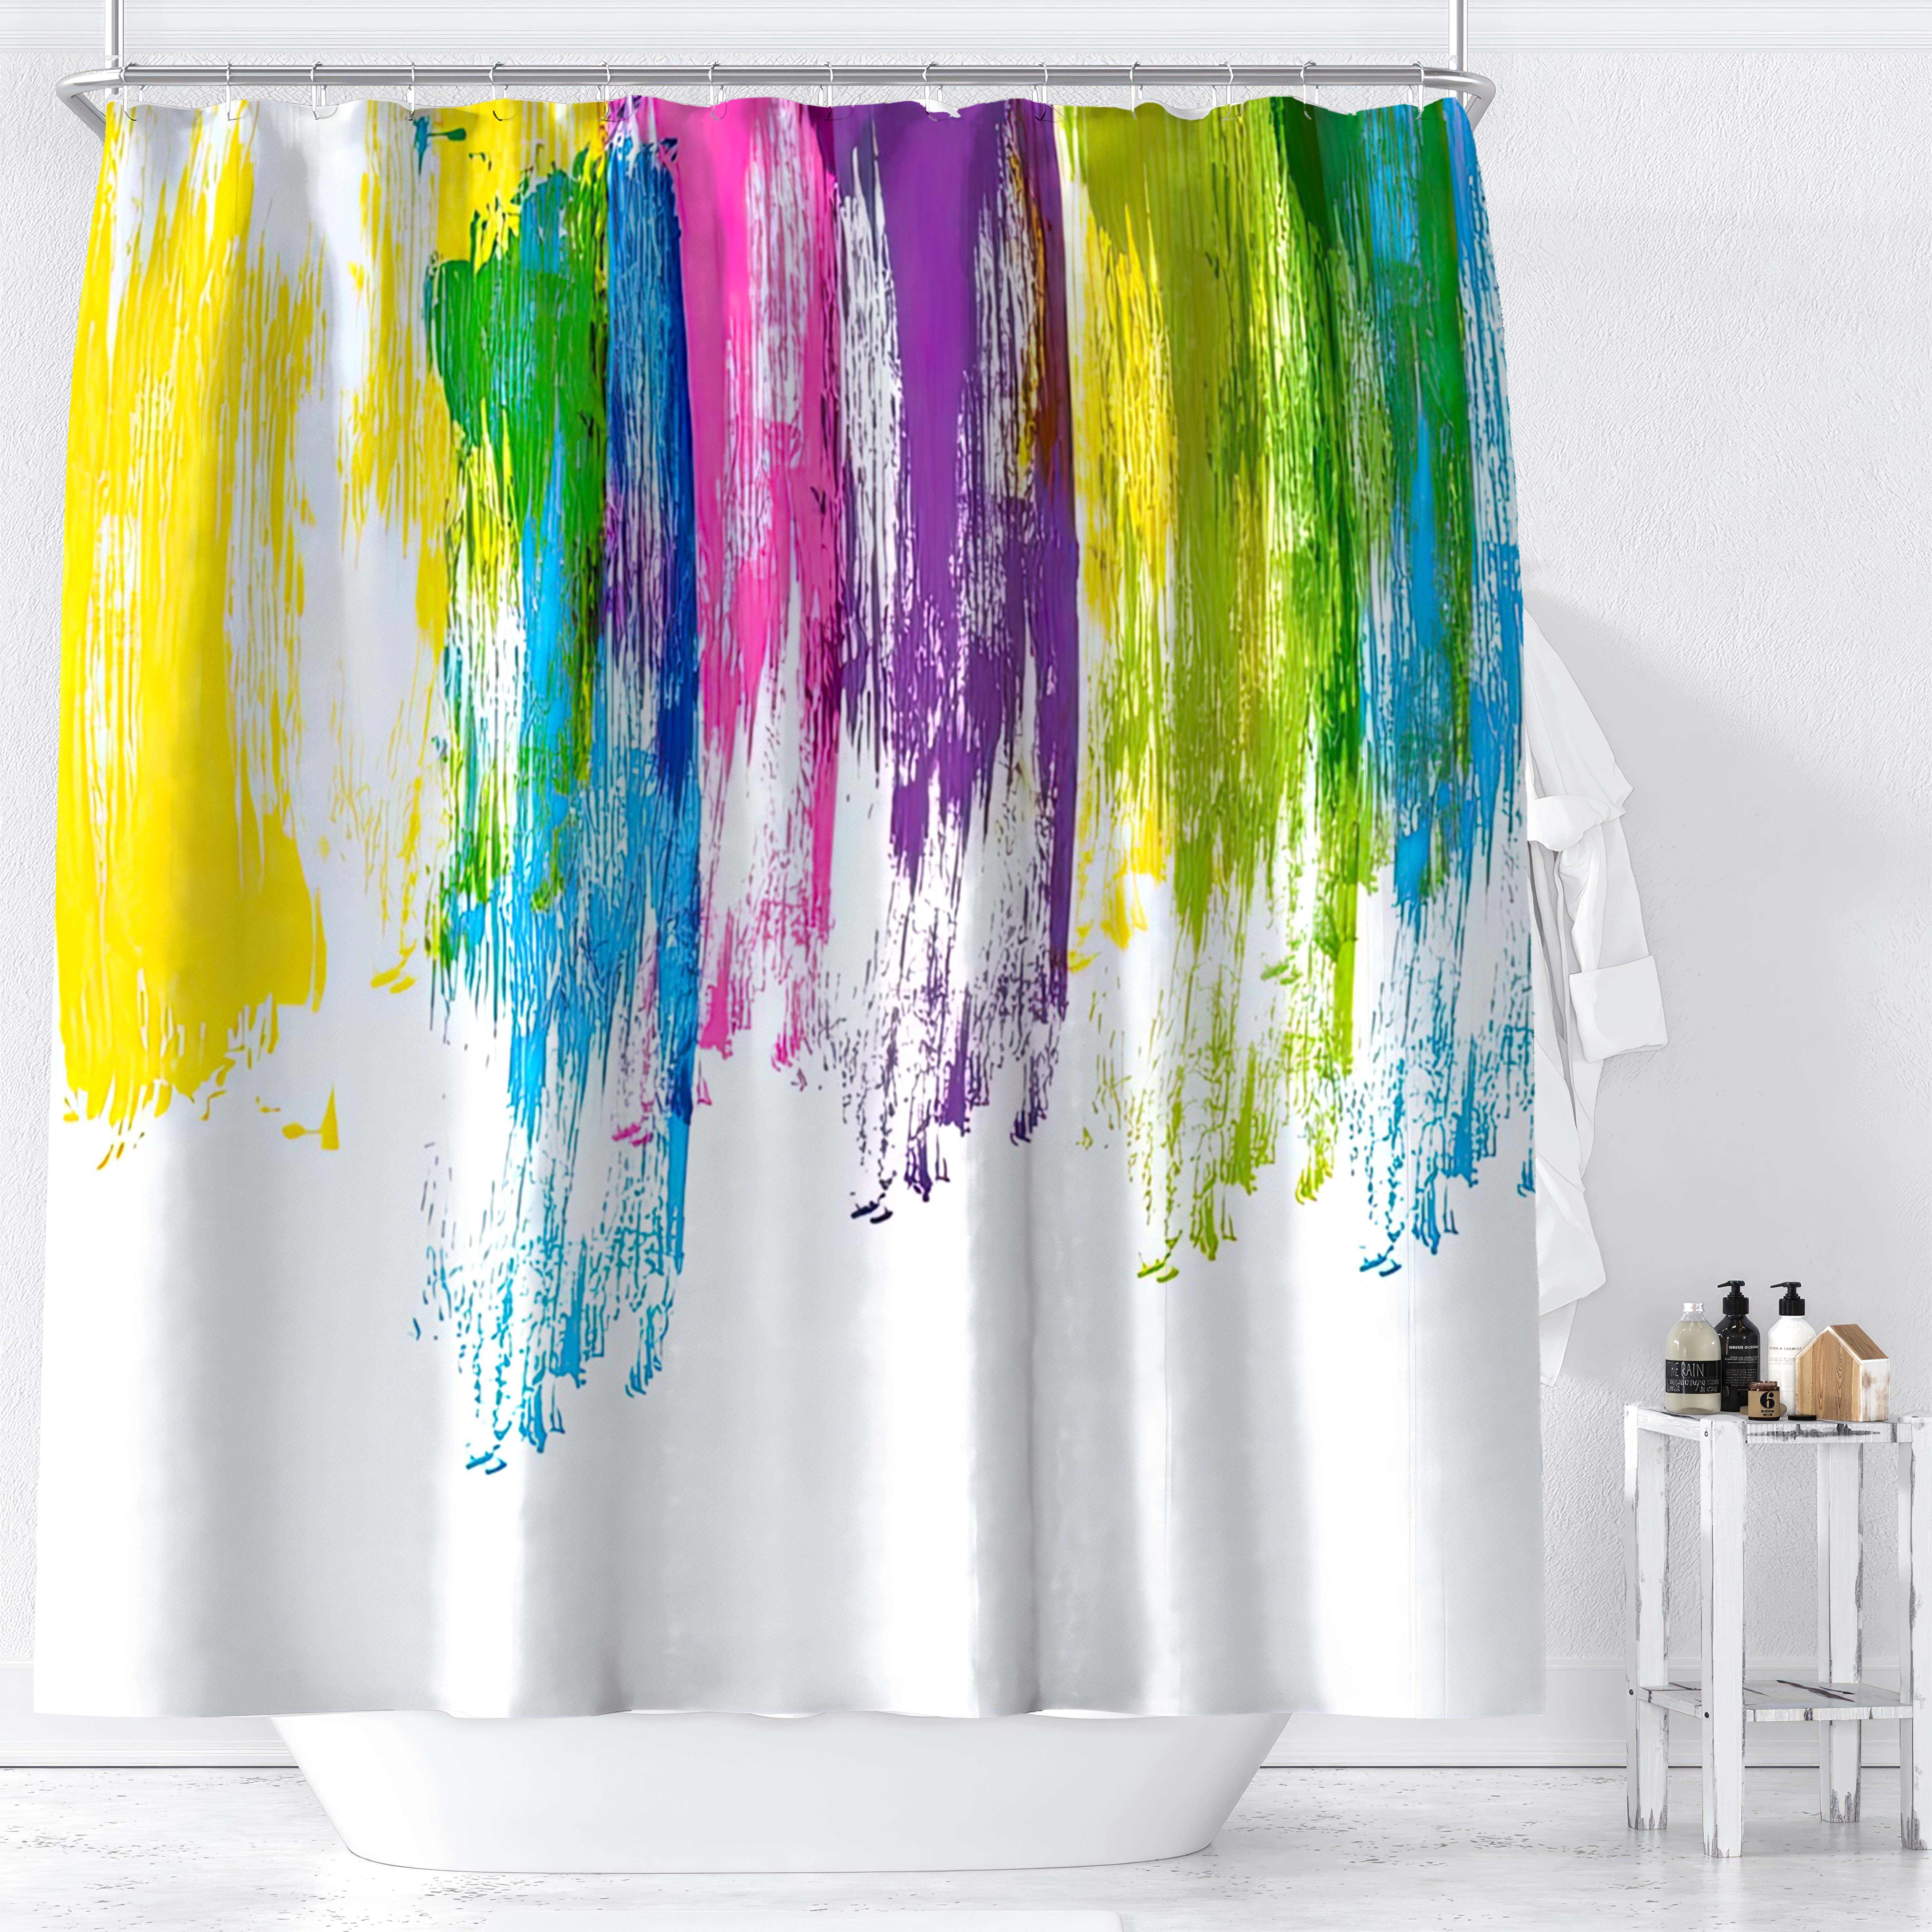 

Waterproof Artistic Graffiti Pattern Digital Print Shower Curtain With Hooks, Polyester Knit Fabric, Machine Washable, All-season Bathroom Decor By Ywjhui - 1pc